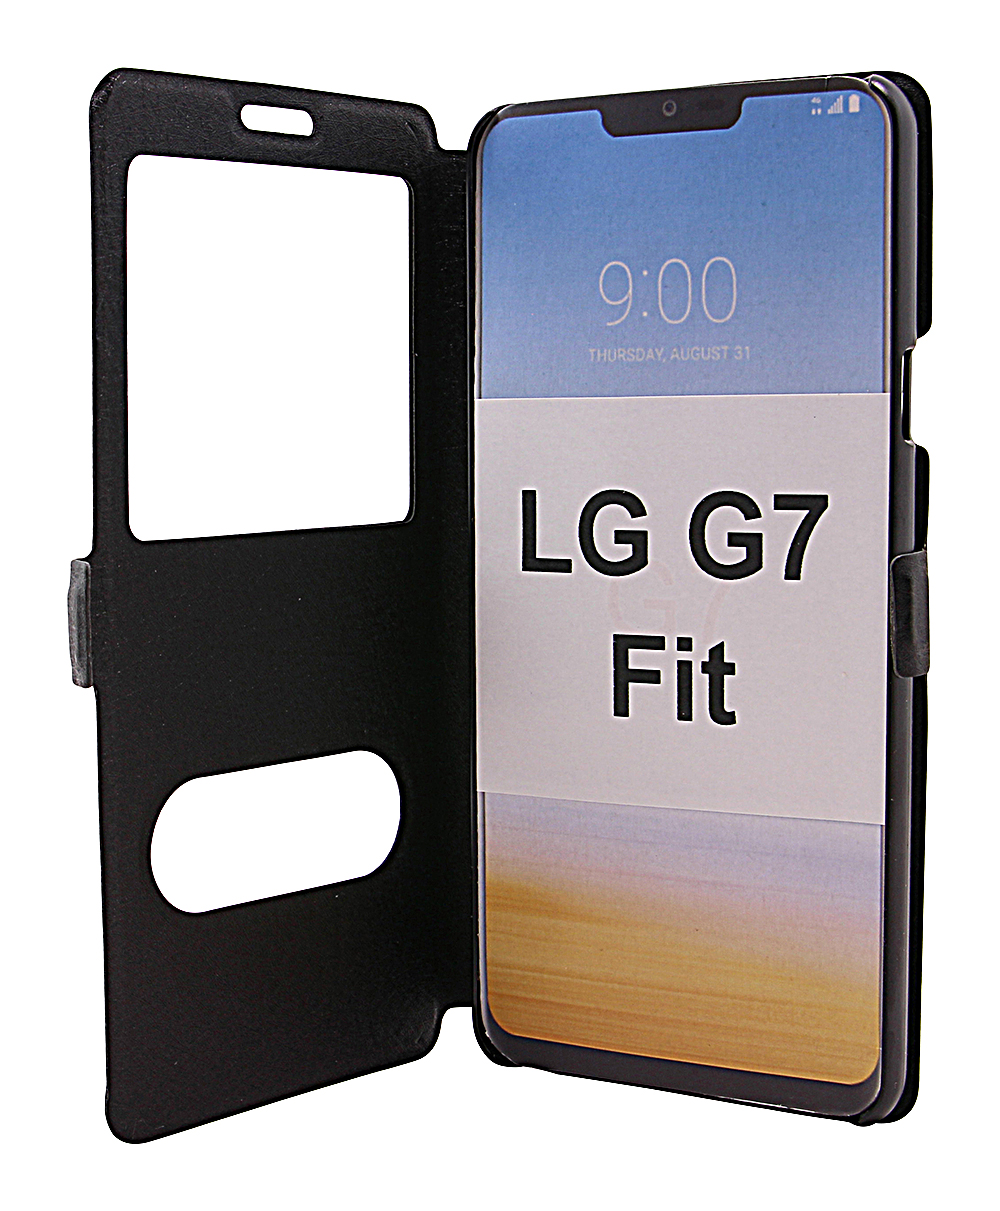 Flipcase LG G7 Fit (LMQ850)